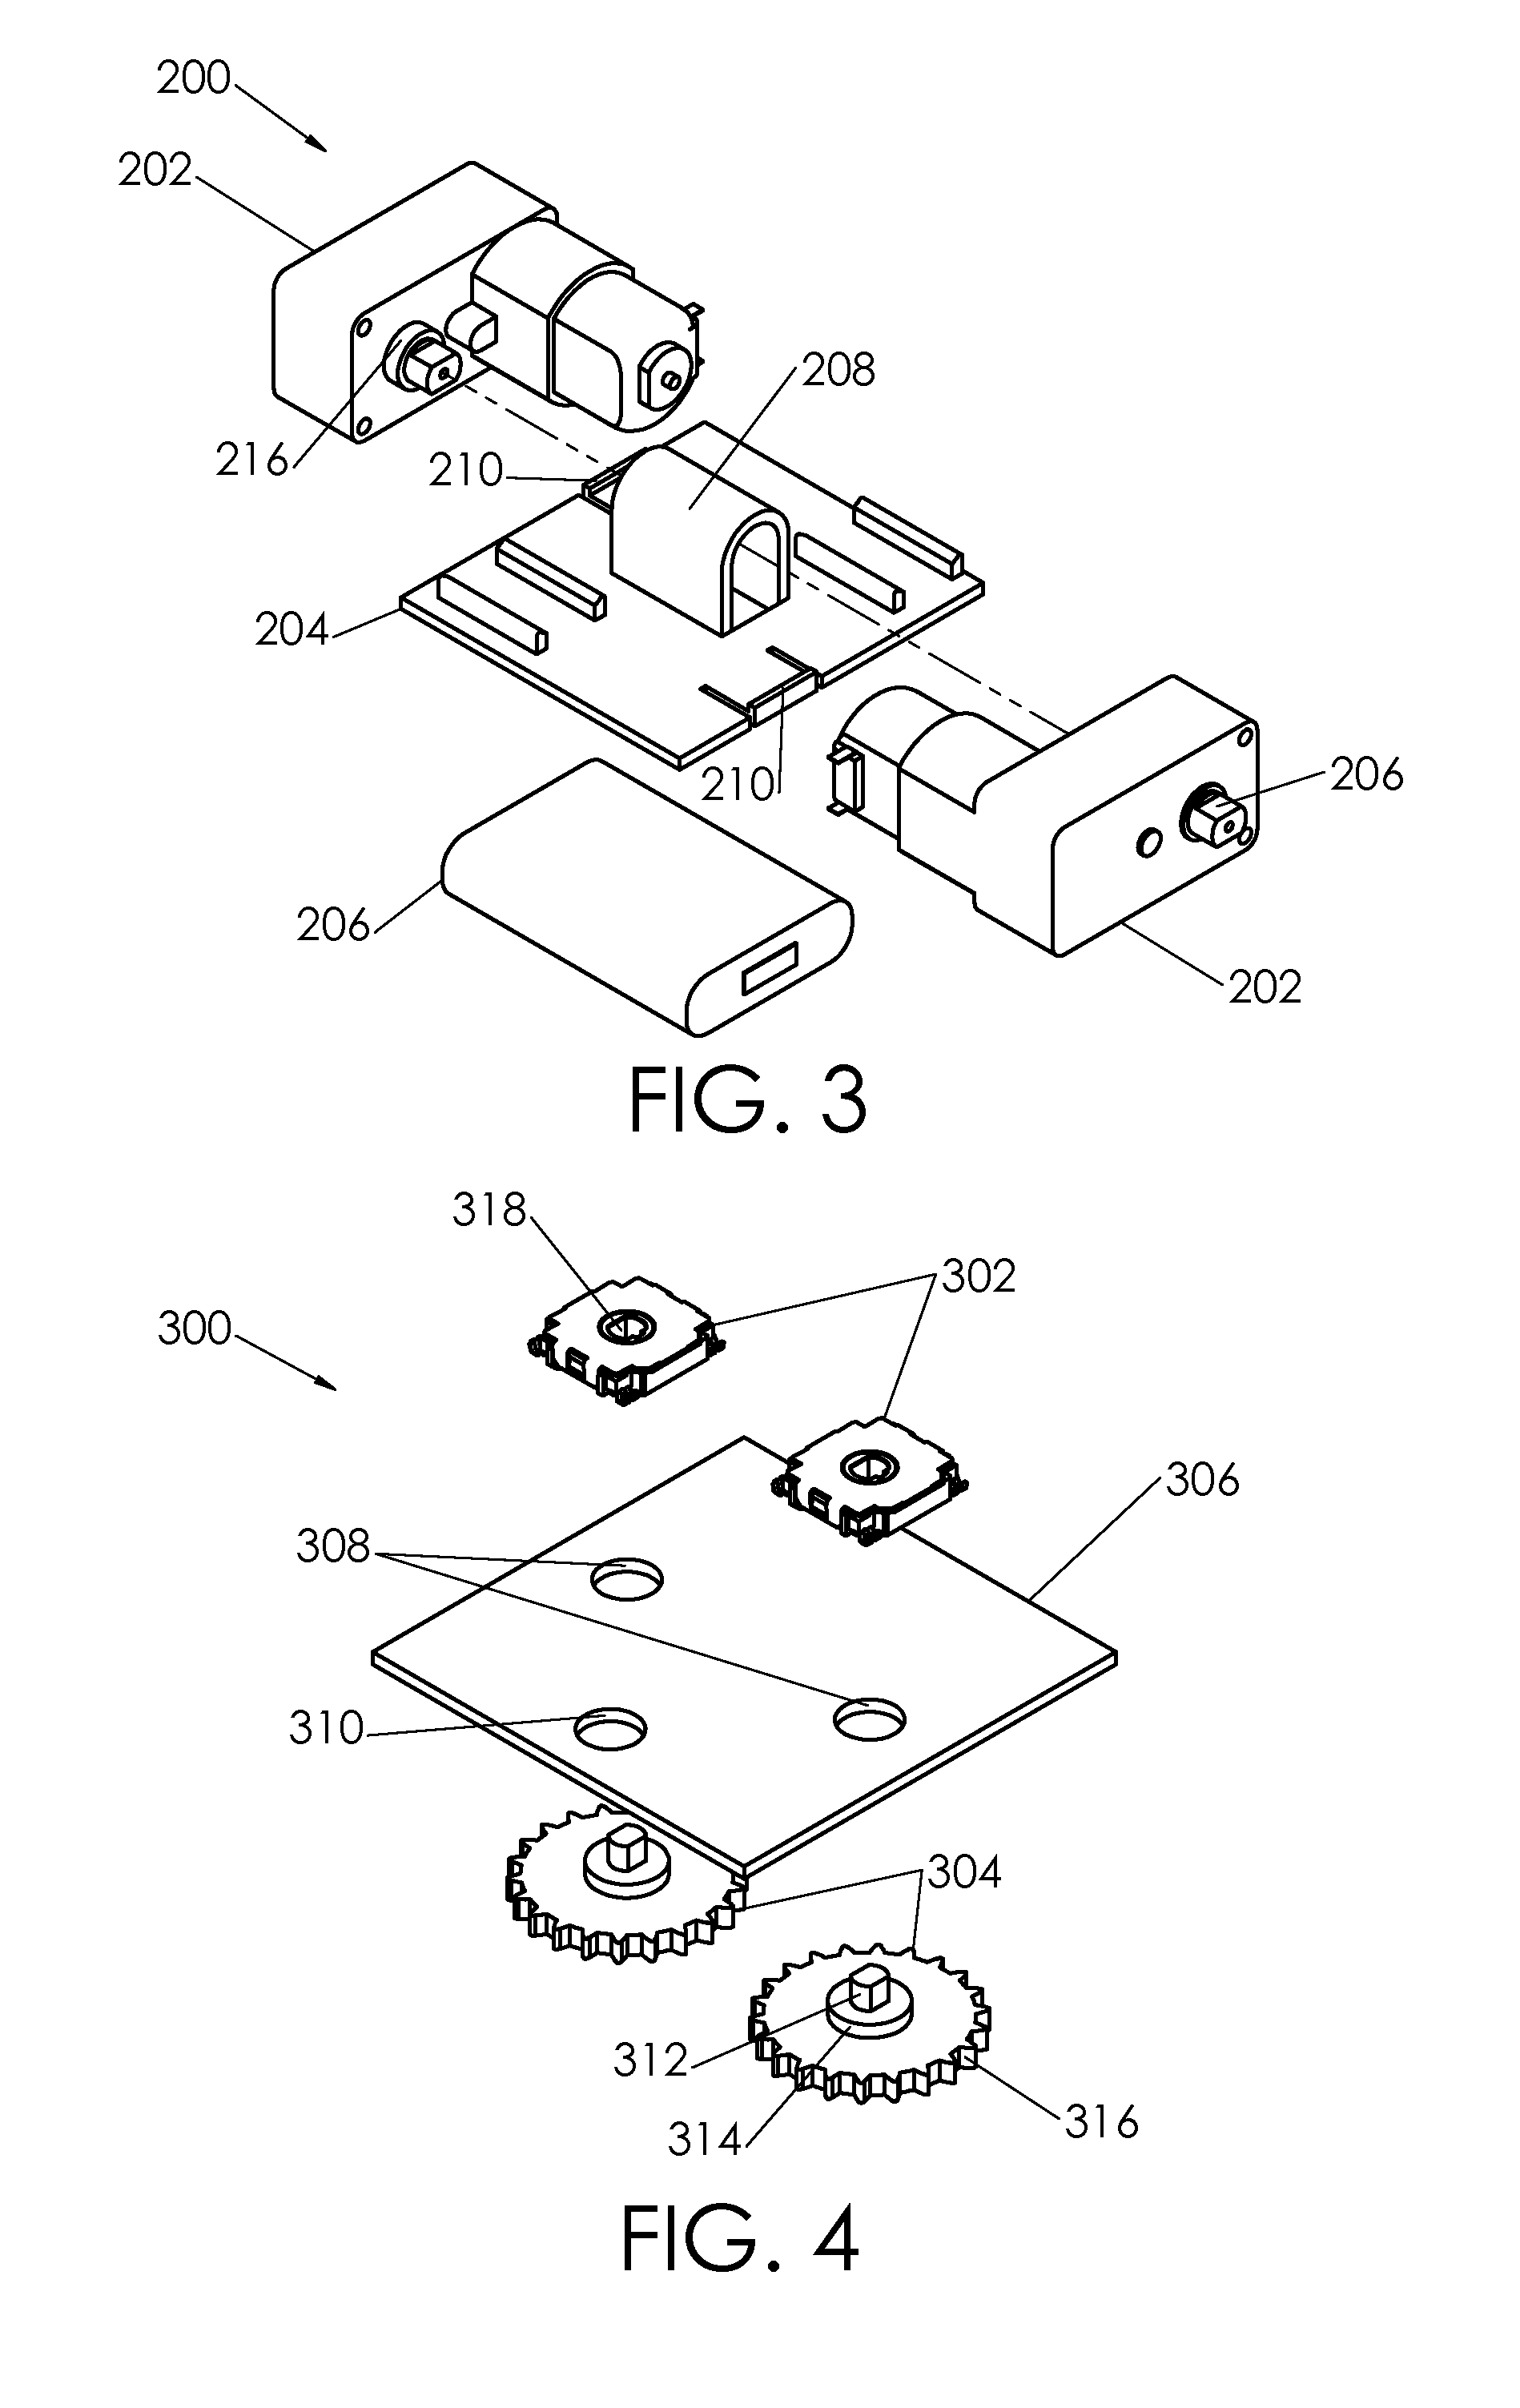 Modular robot system